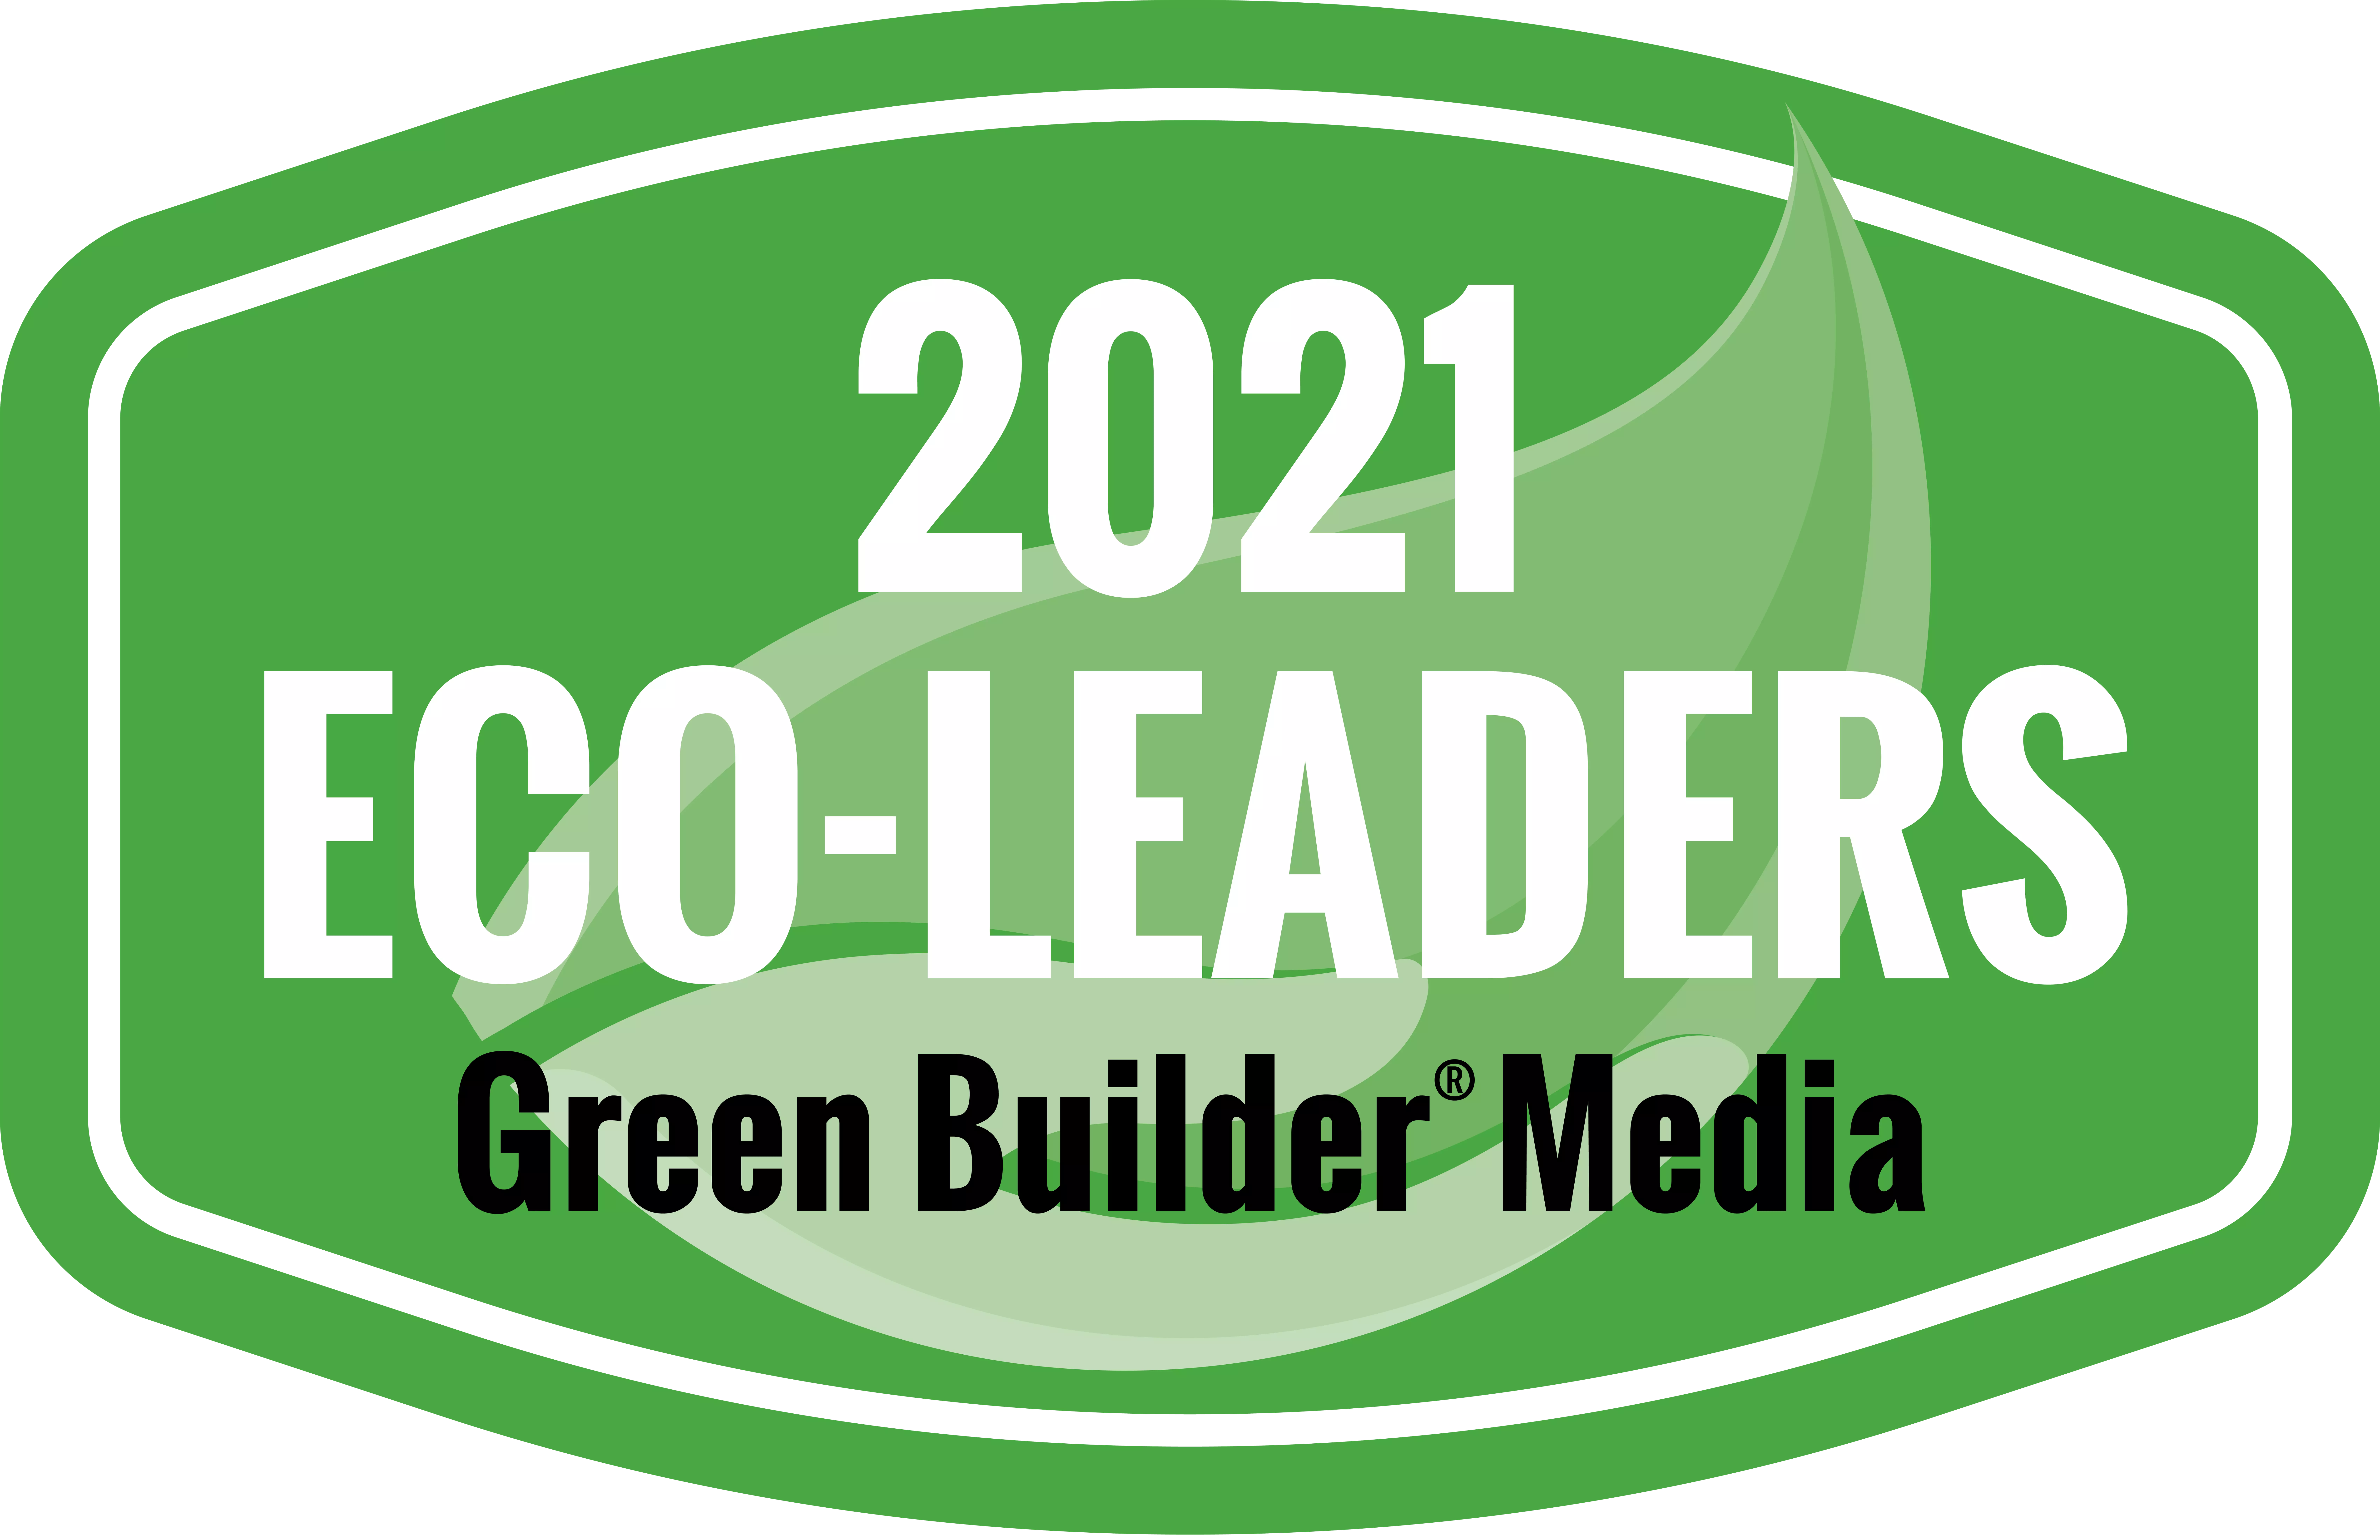 GBM 2021 Eco-Leaders